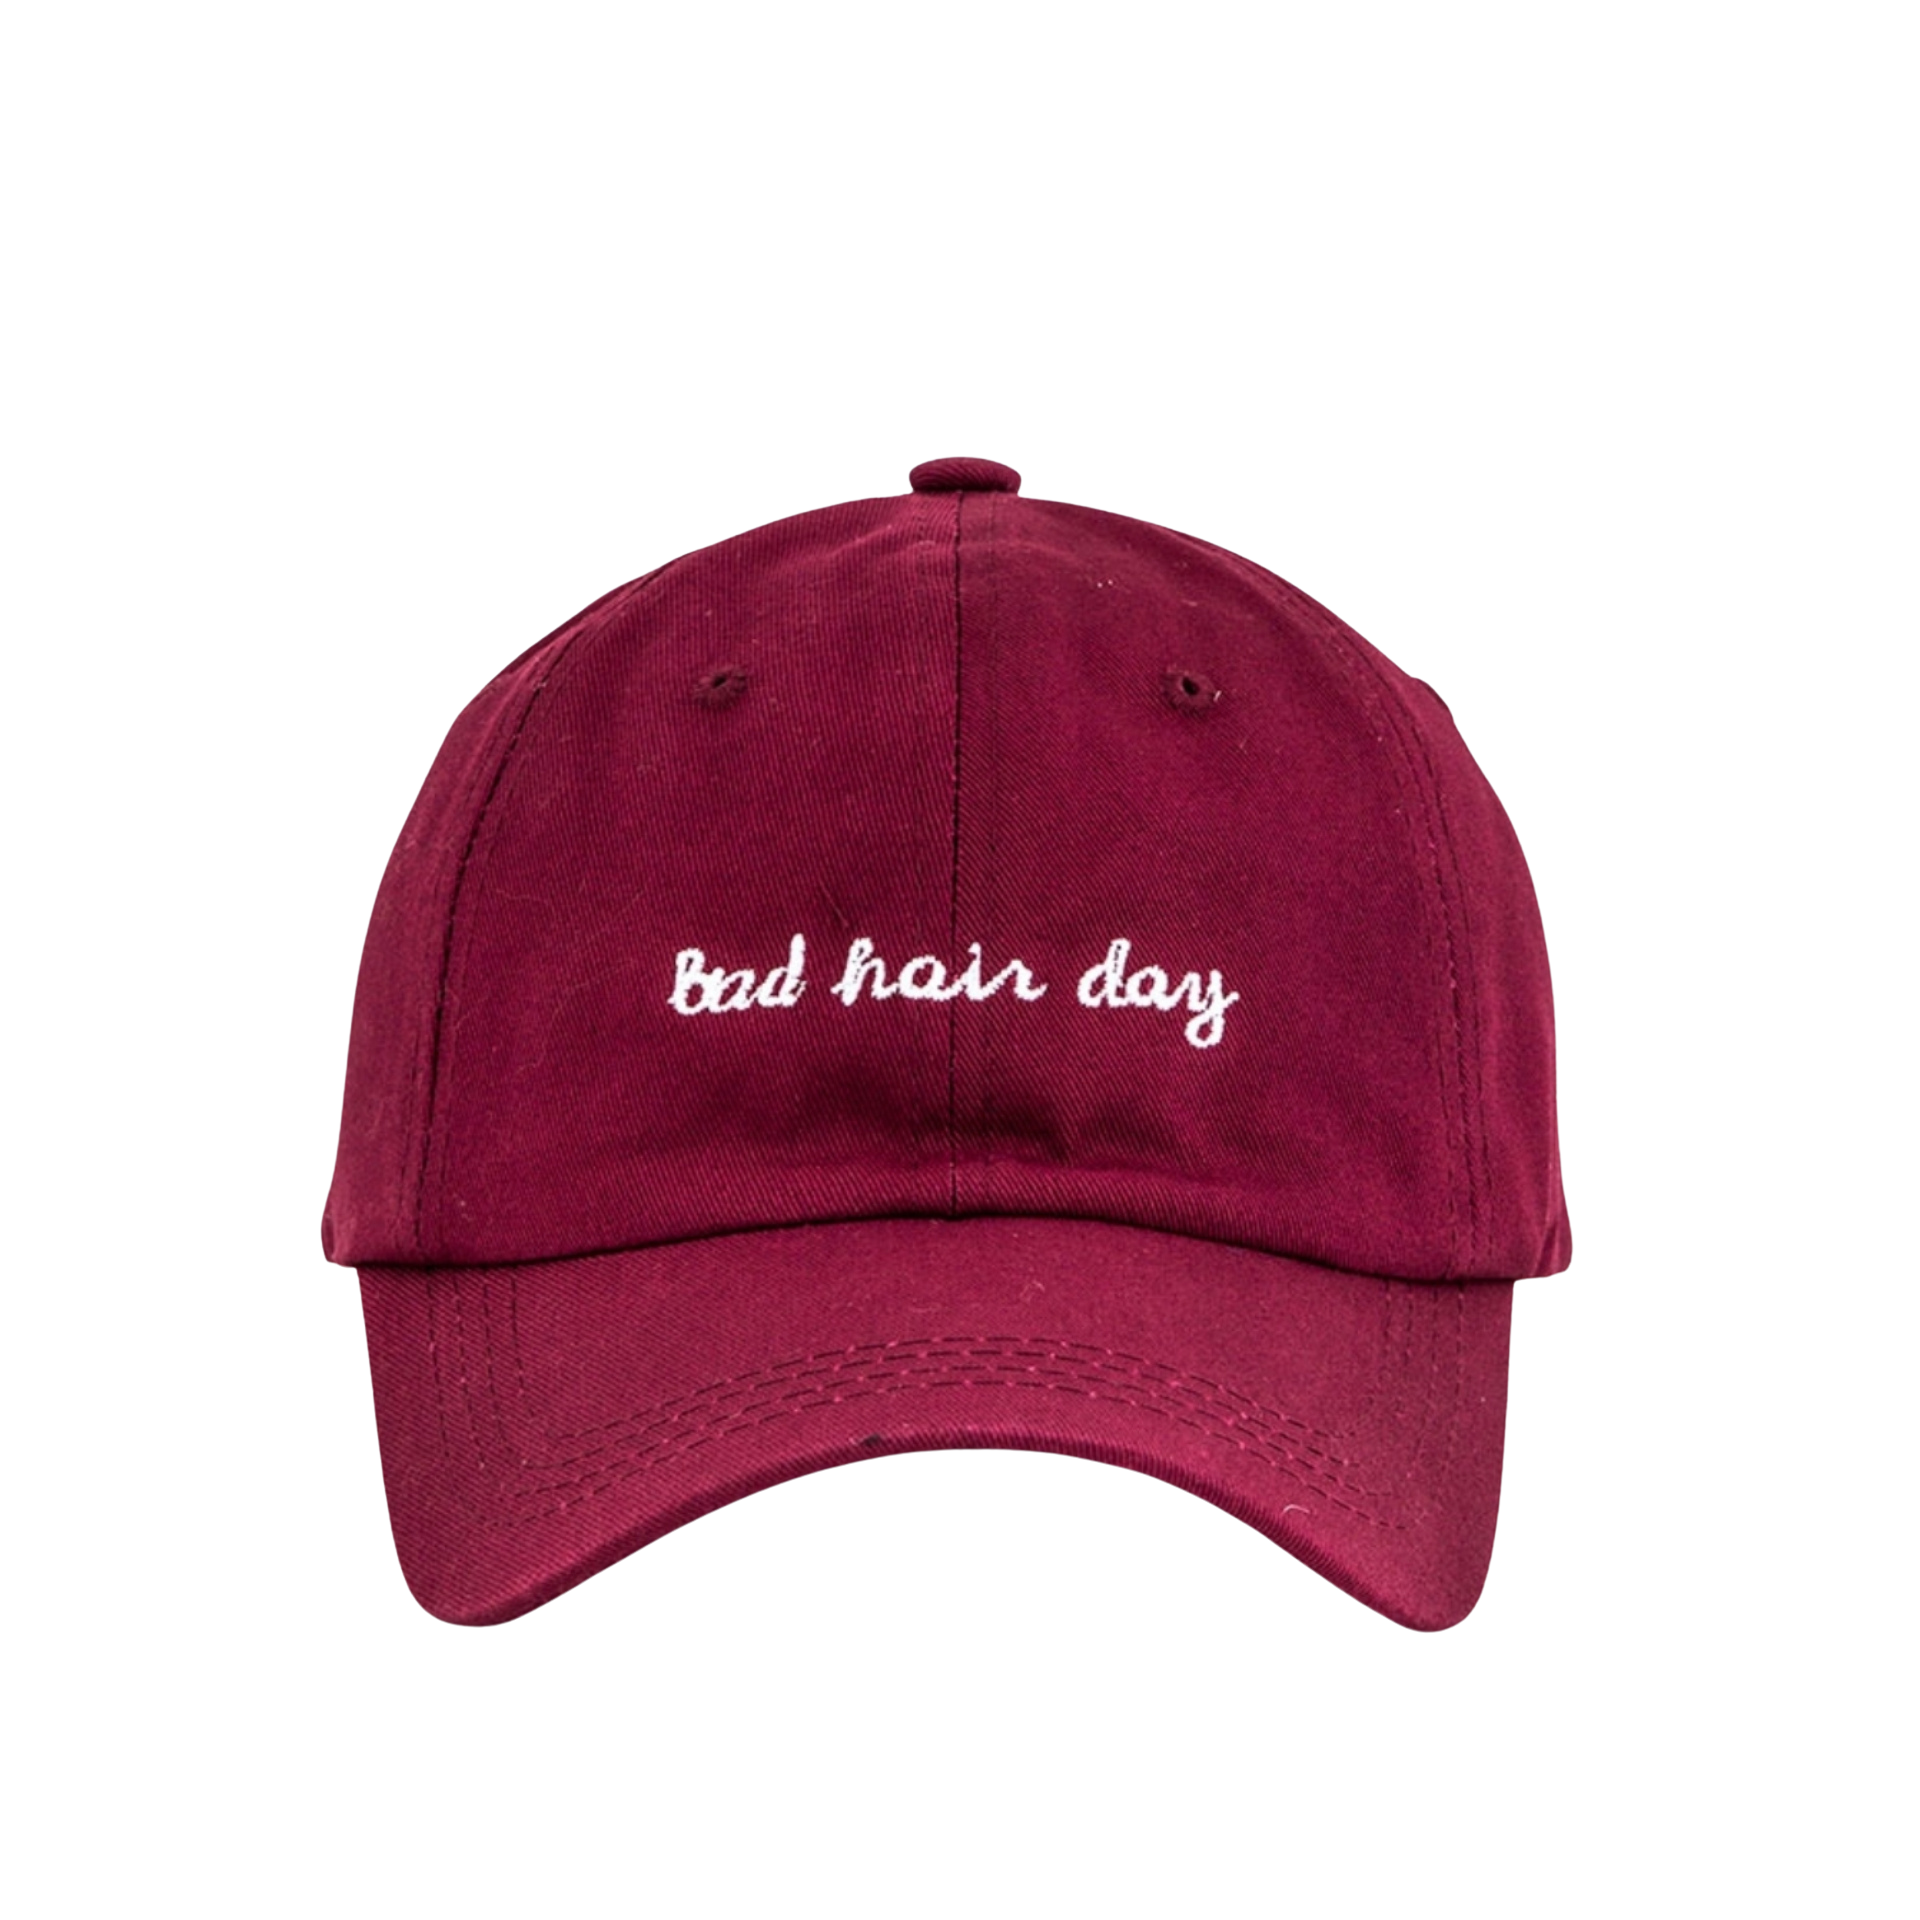 Bad Hair Day Cap (Cloth) - Ariya's Apparel and Accessories